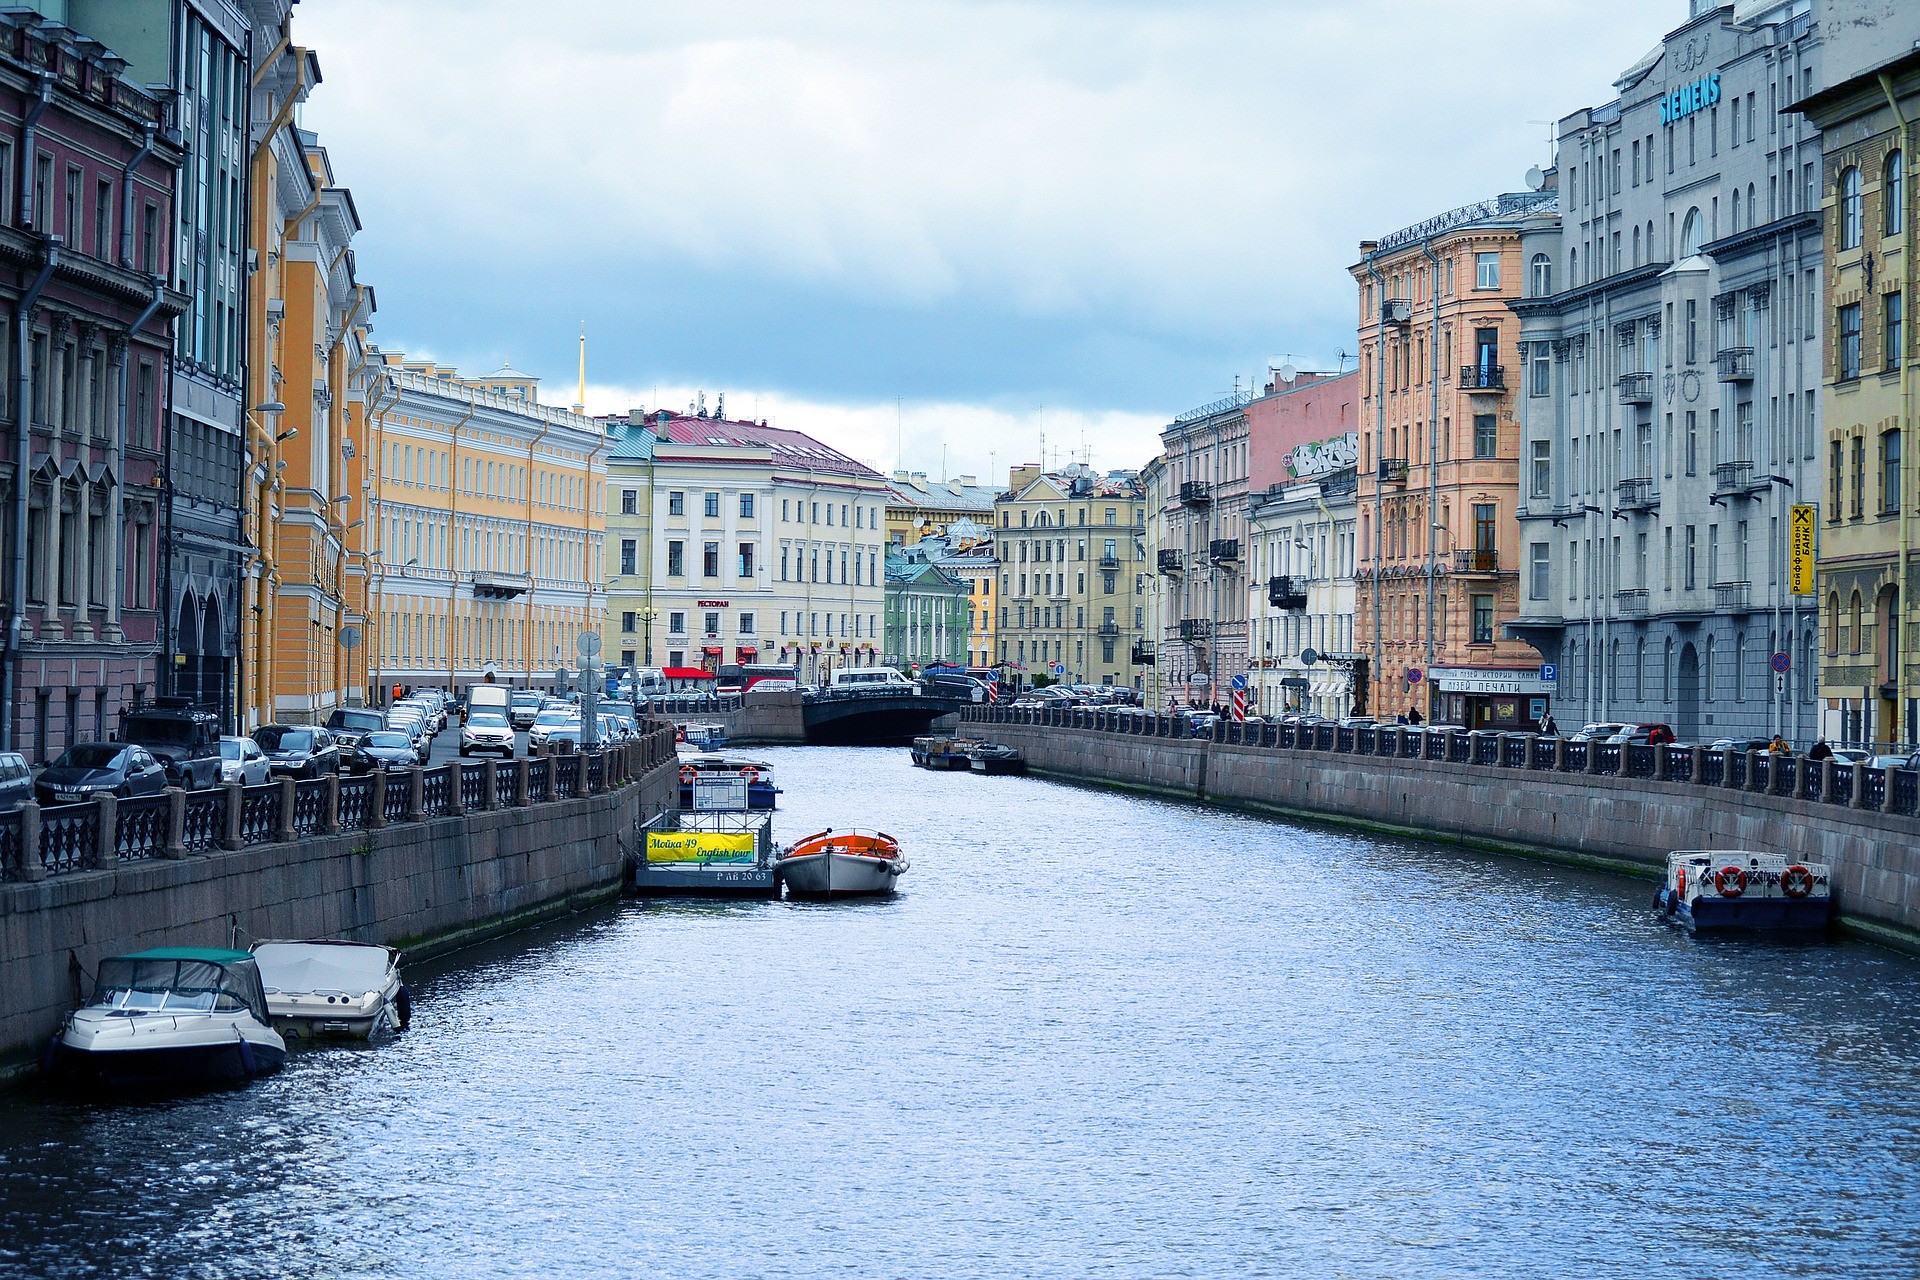 Scorcio di San Pietroburgo - Foto di Q K da Pixabay